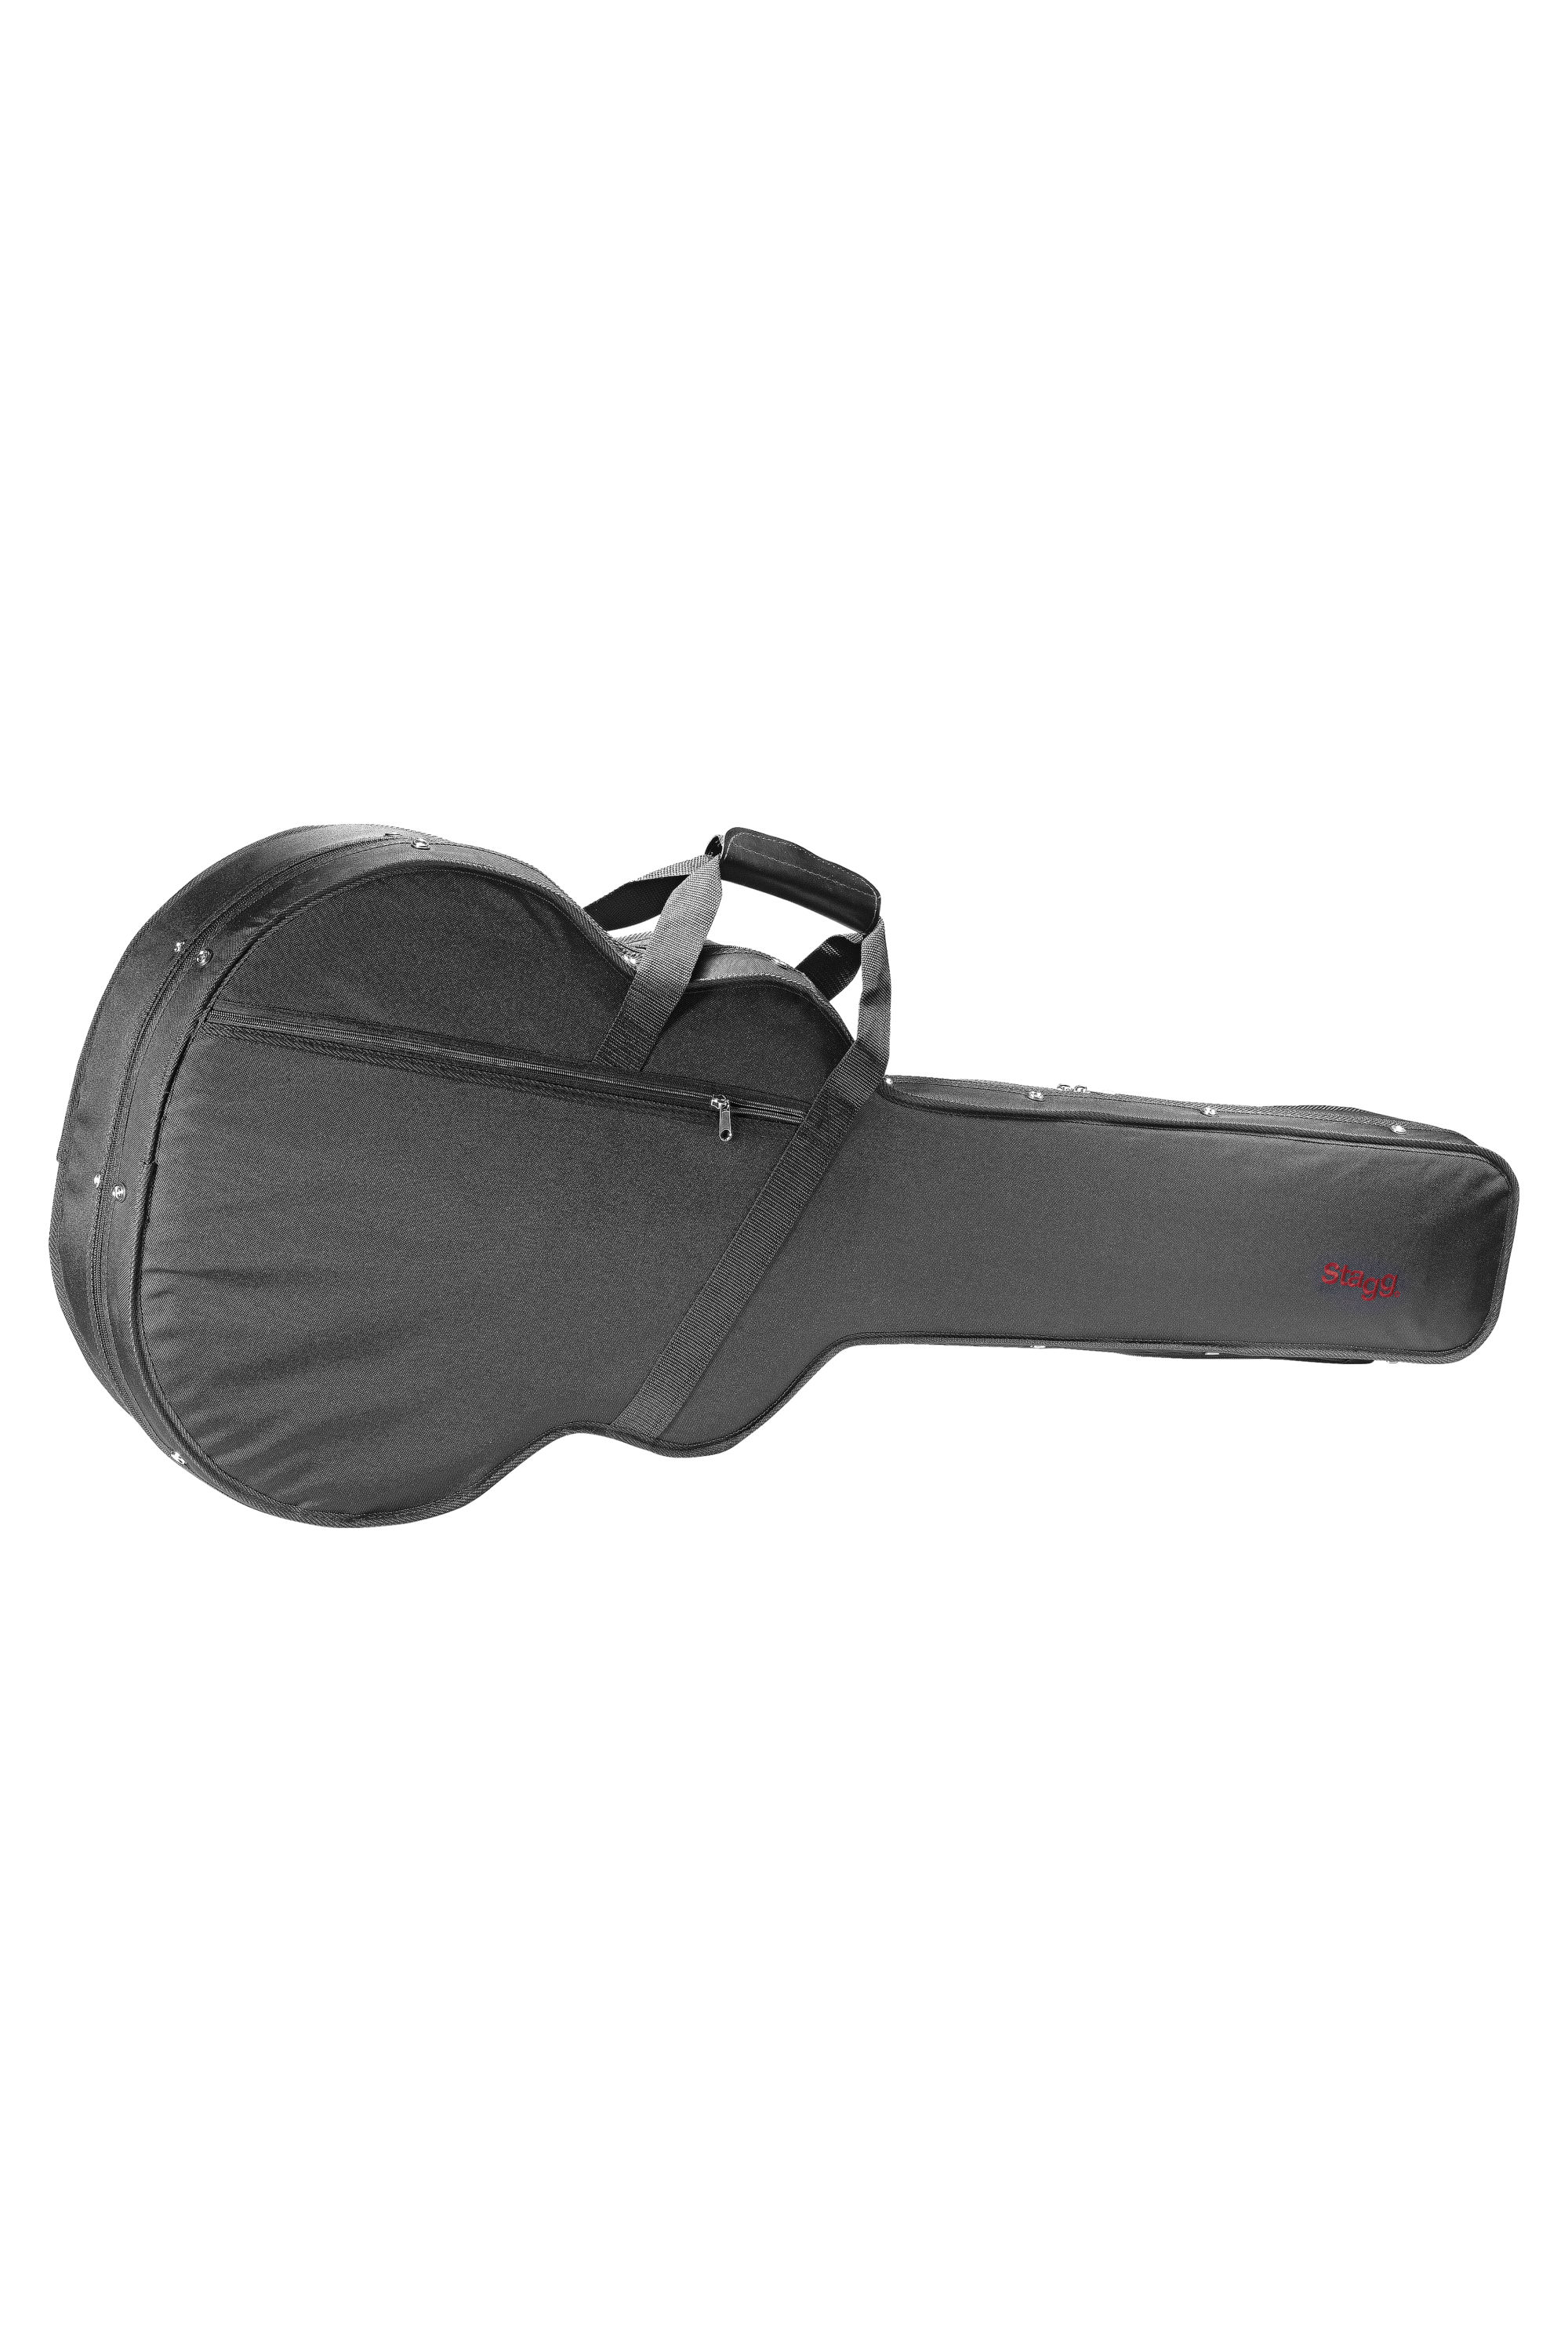 Stagg HGB2-J, lehký kufr pro akustickou kytaru typu Jumbo